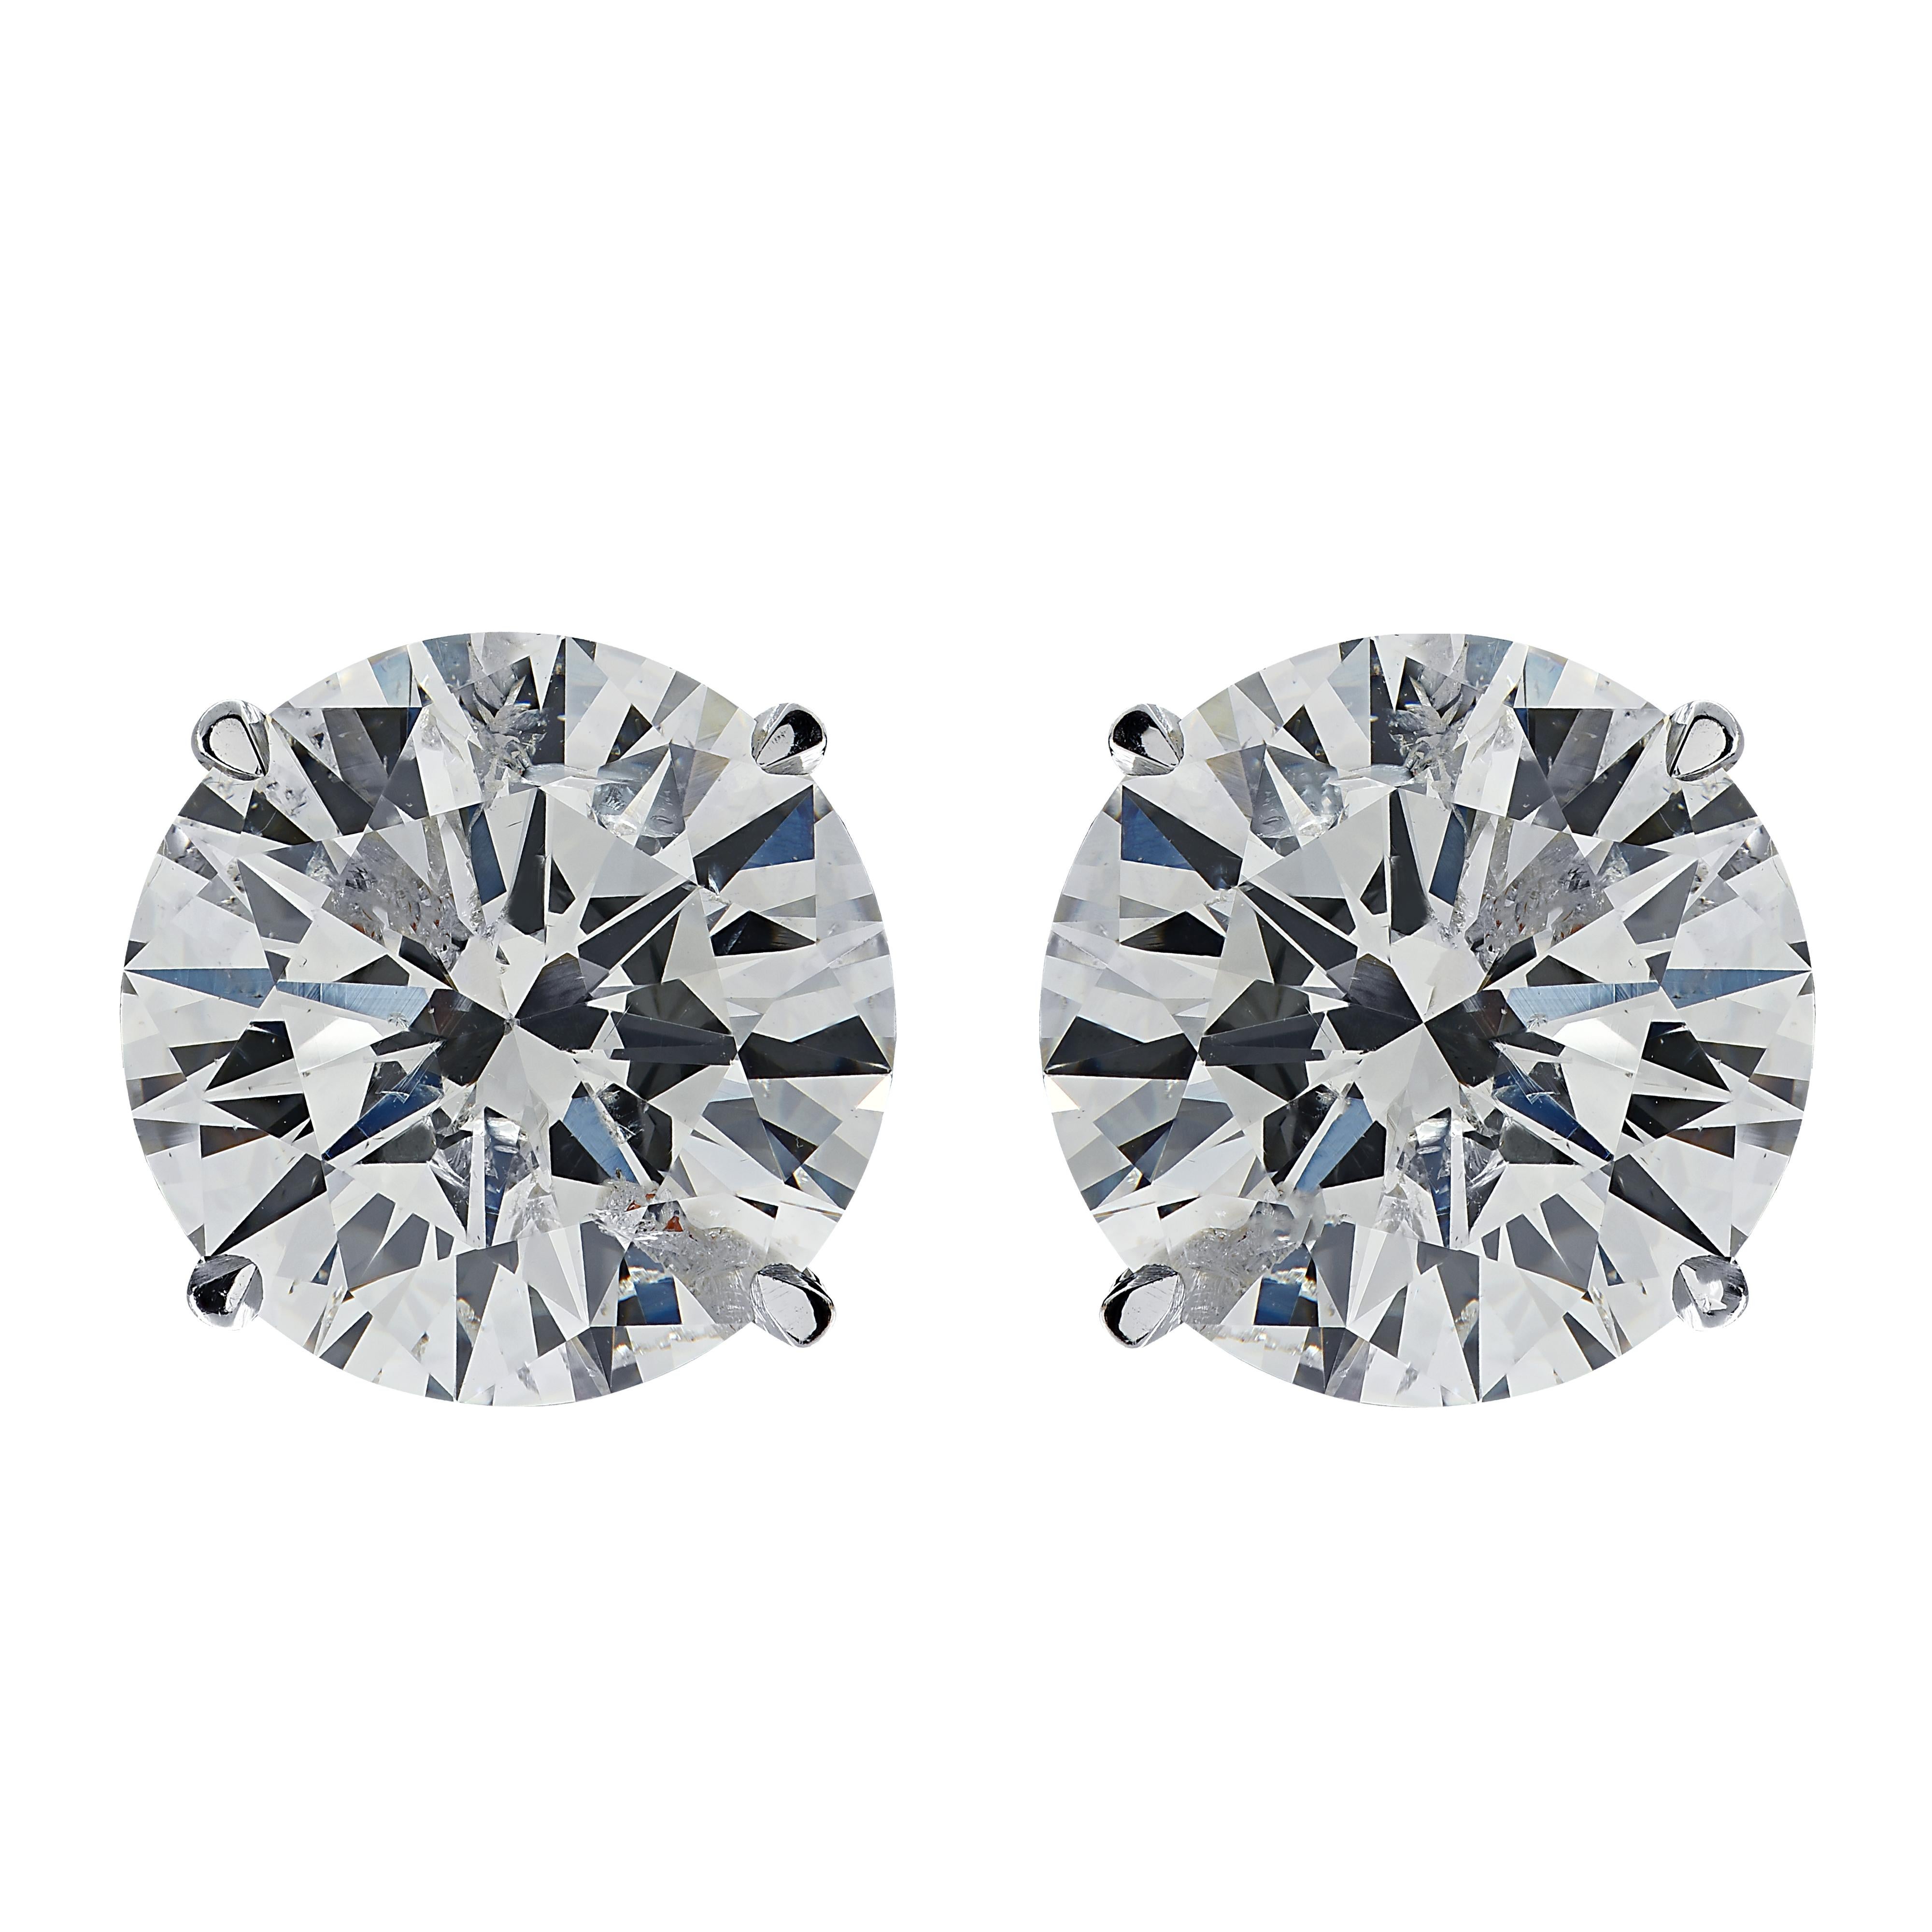 Round Cut Vivid Diamonds GIA Certified 3.01 Carat Diamond Solitaire Stud Earrings For Sale